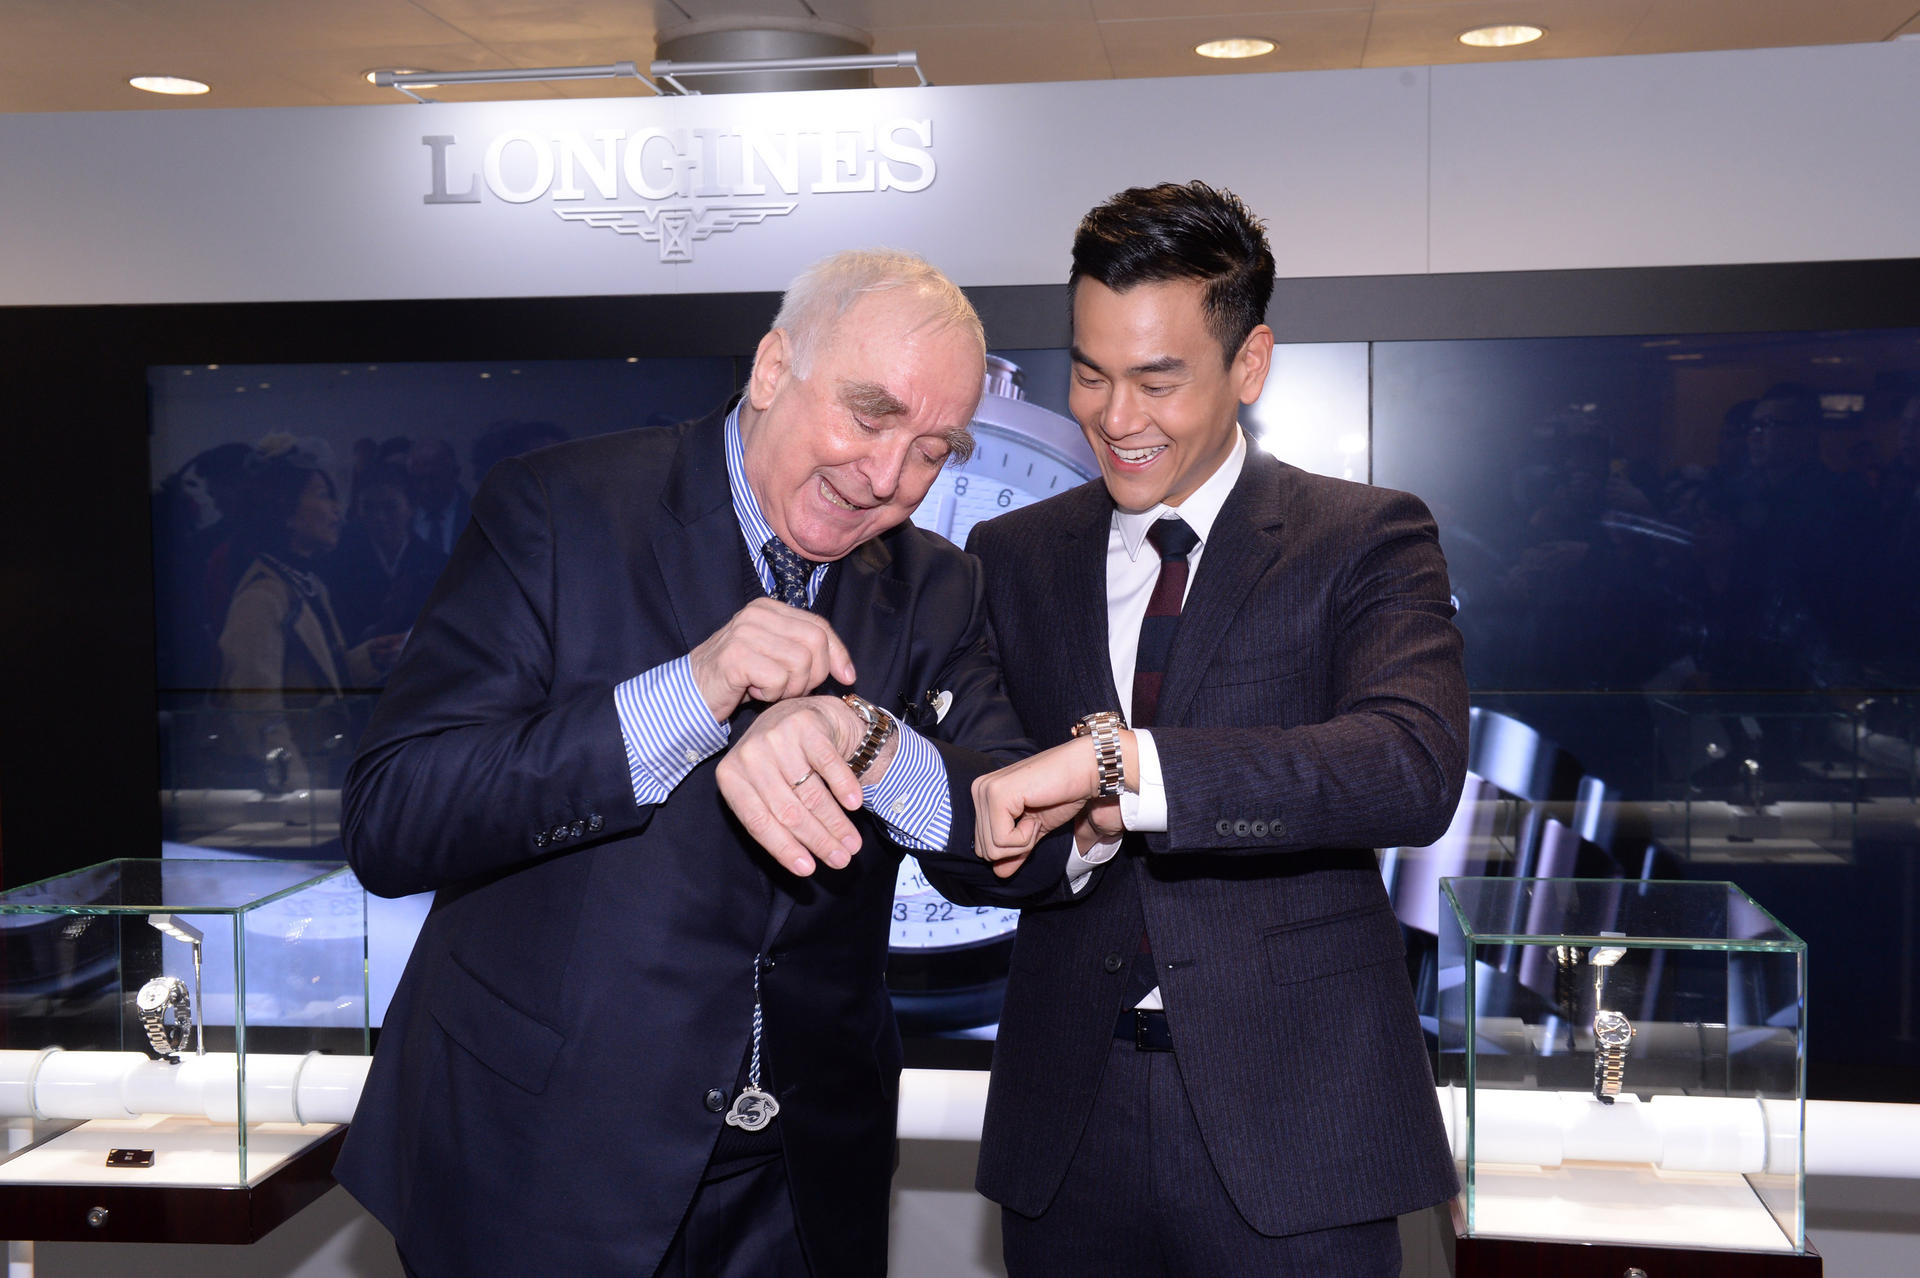 Longines president Walter von Känel and Eddie Peng exchange opinions on watches #stylescmp